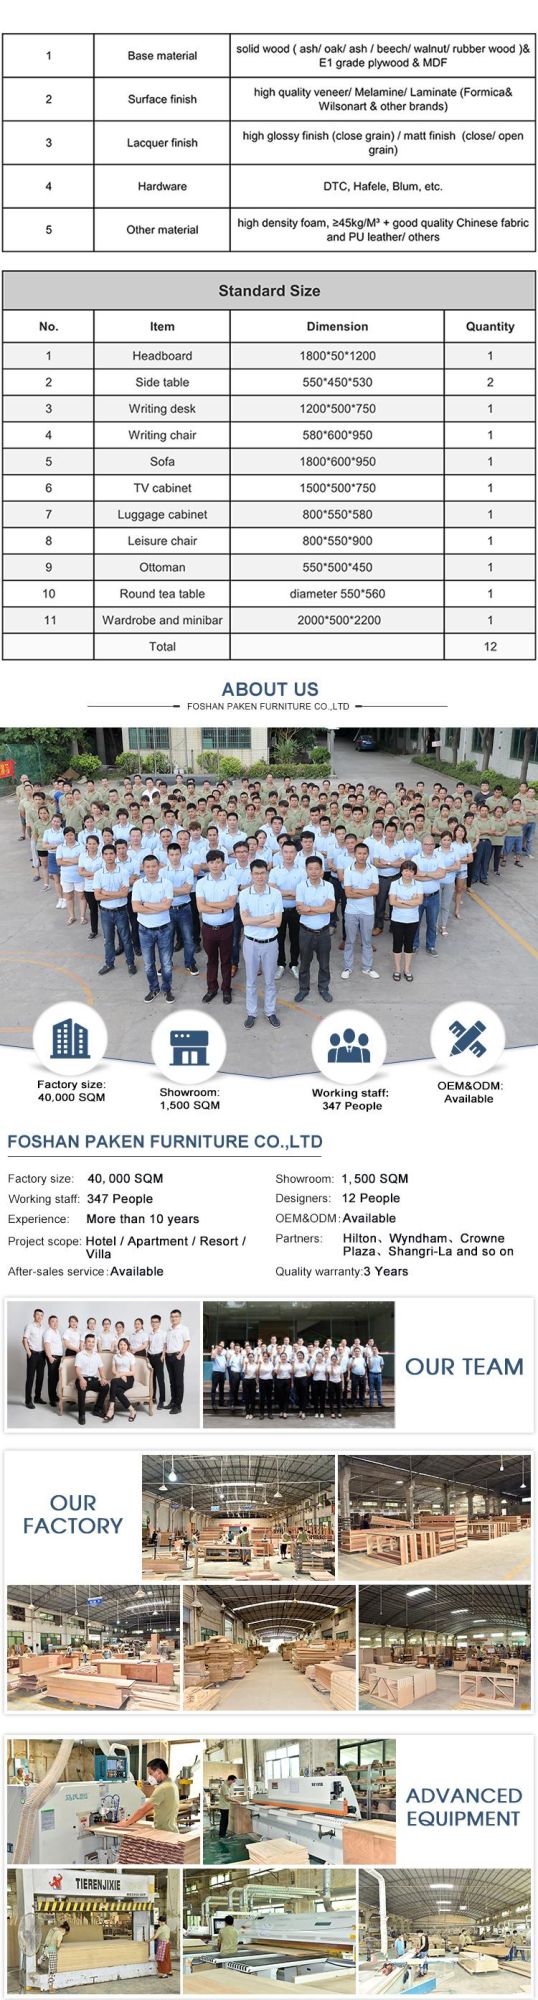 Foshan Paken Furniture Company Hotel Furniture for Sale